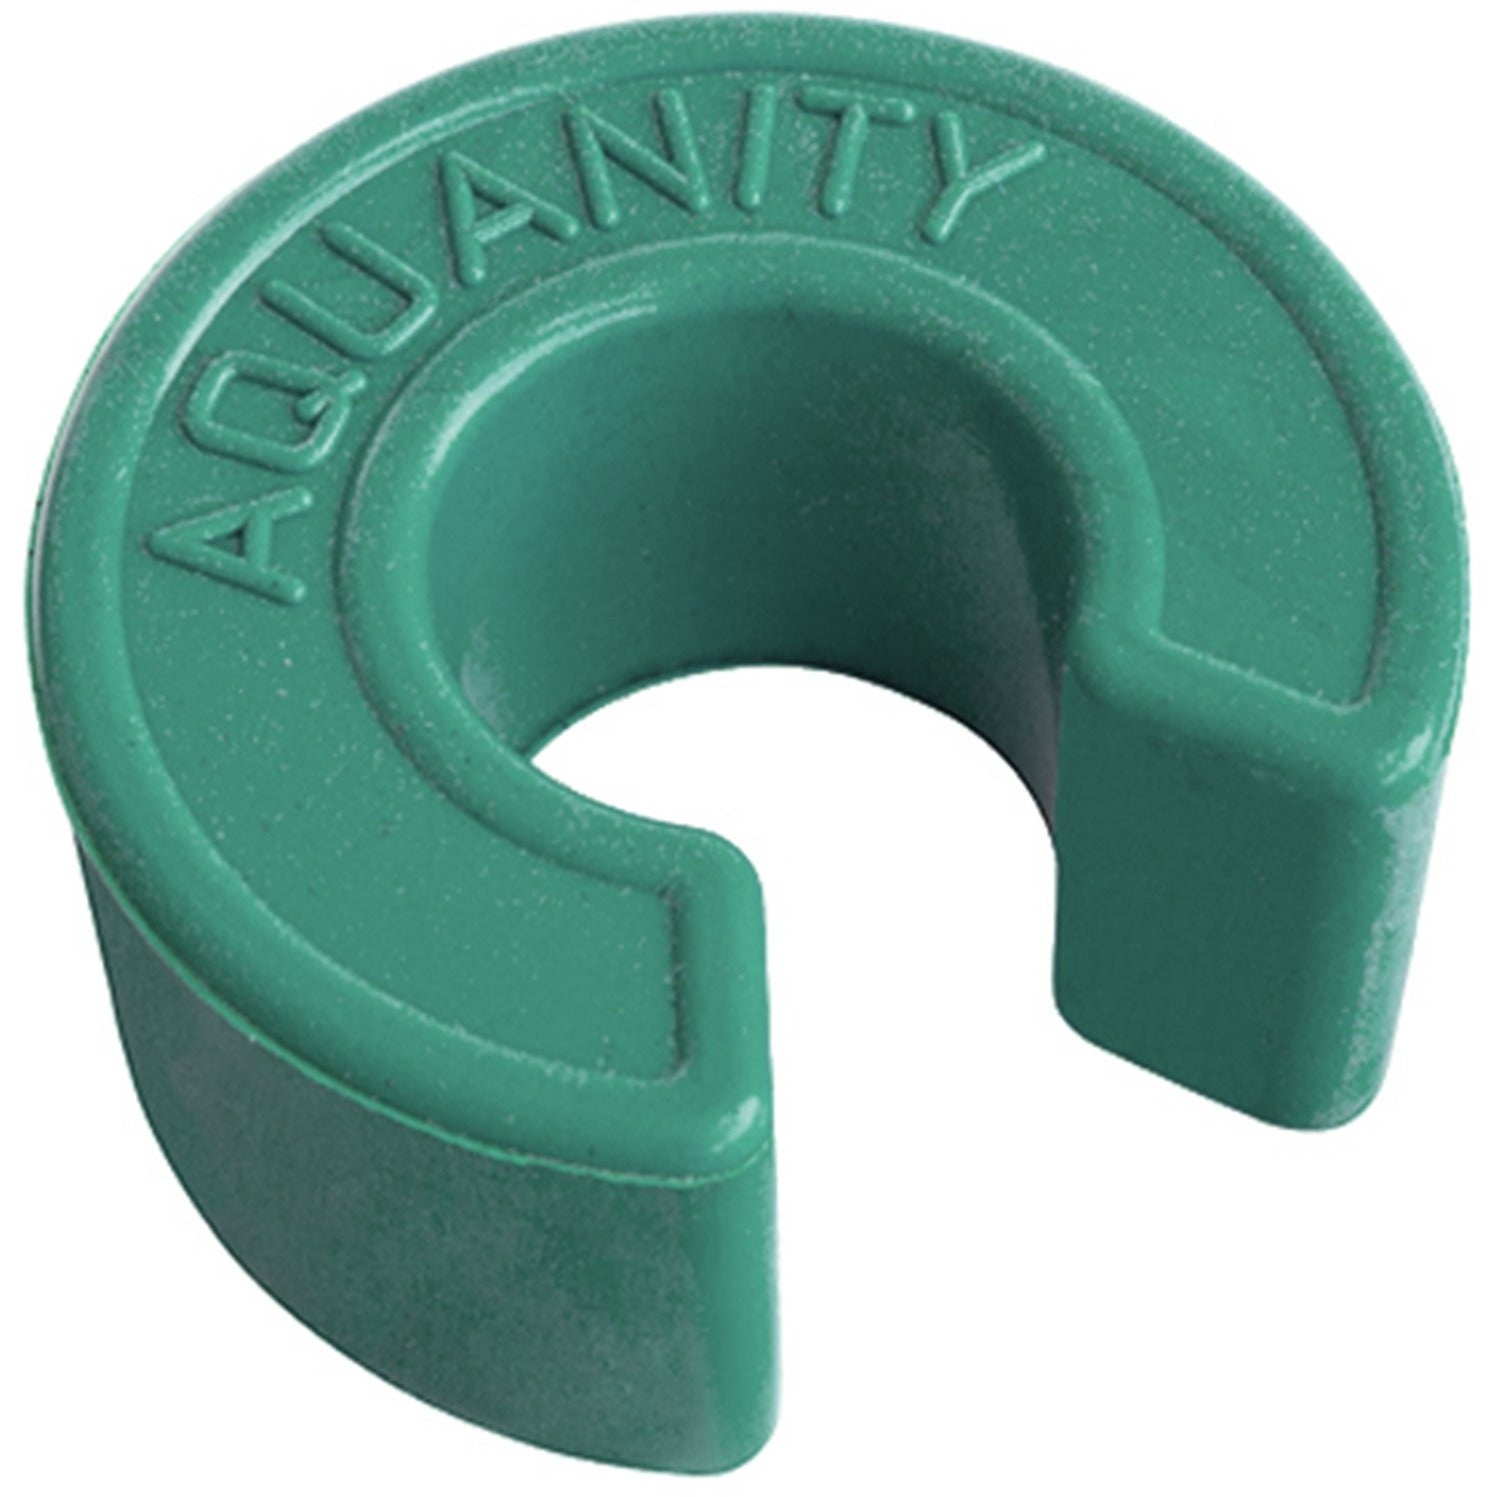 Aquanity Gardening - Aquanity